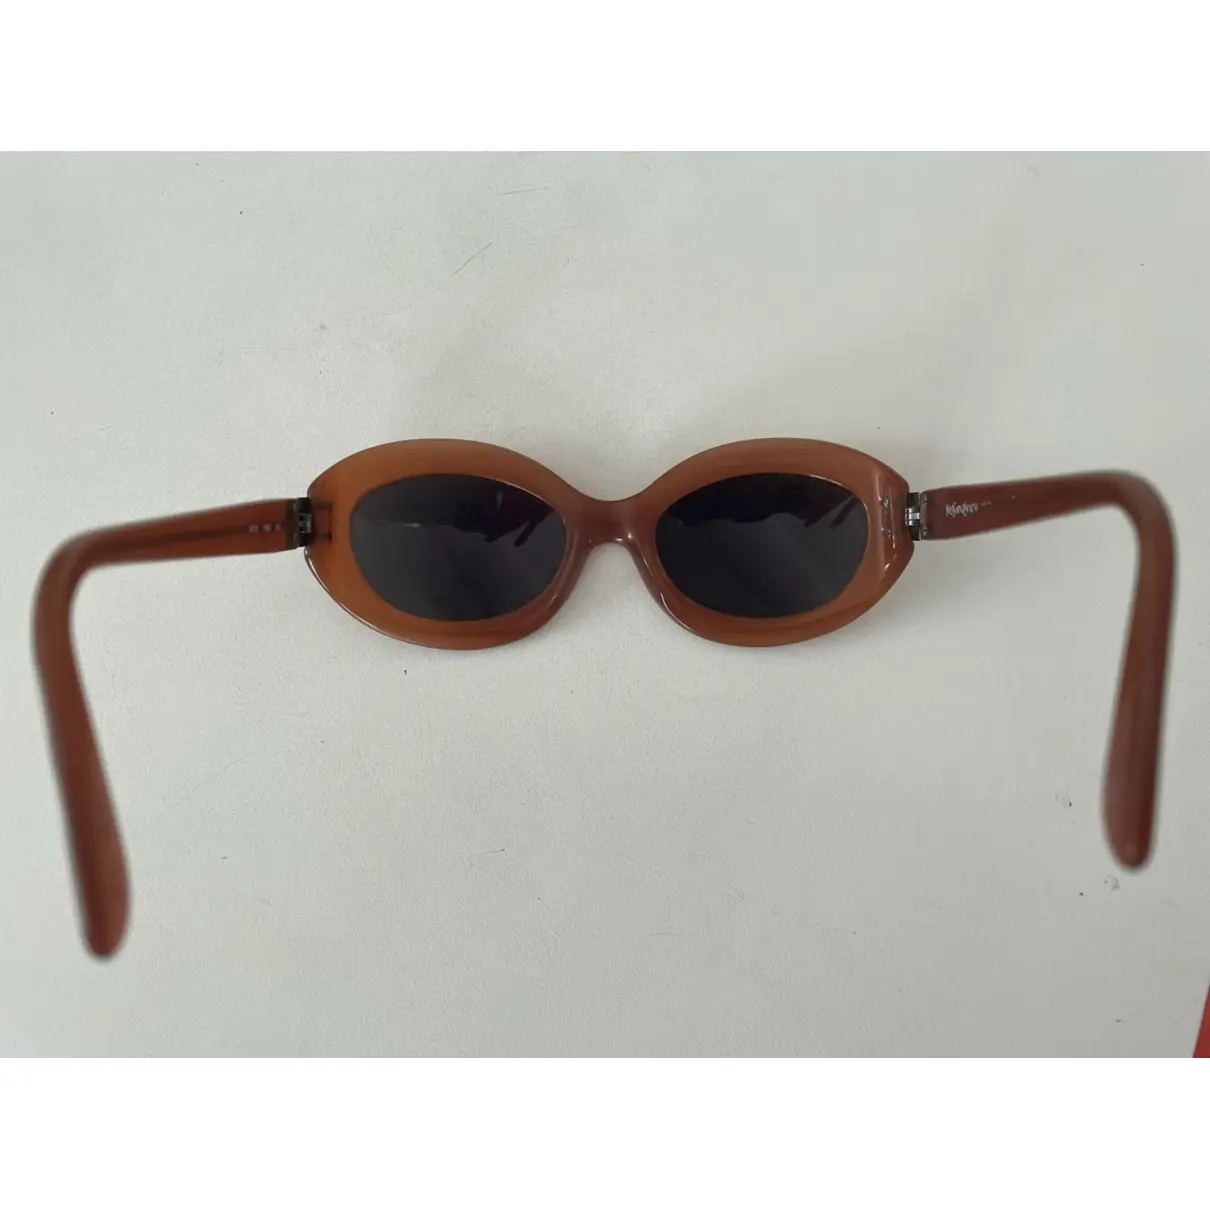 Sunglasses Yves Saint Laurent